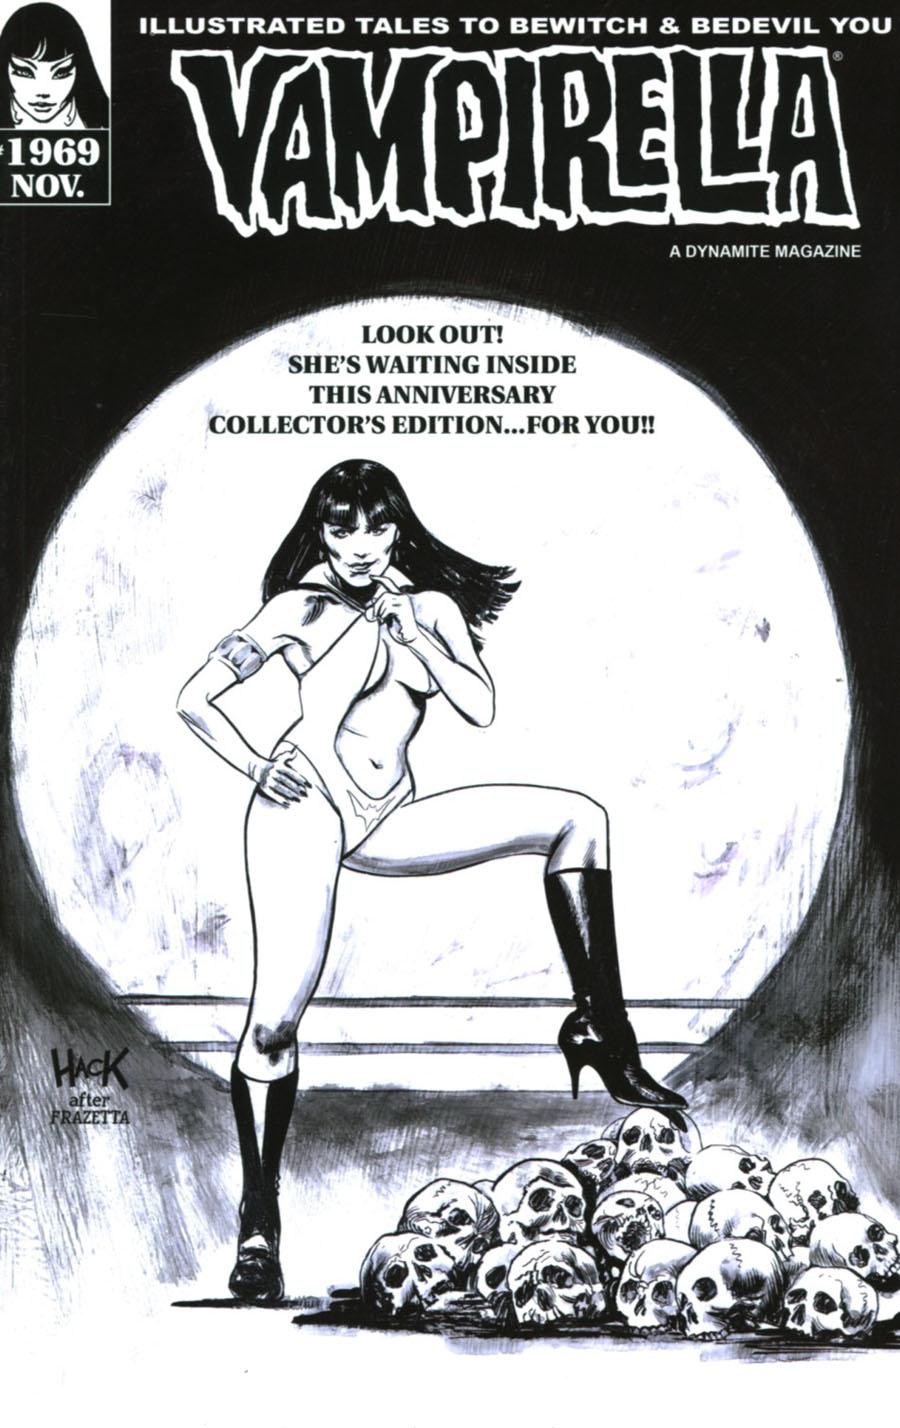 Vampirella Vol. 1 #1969